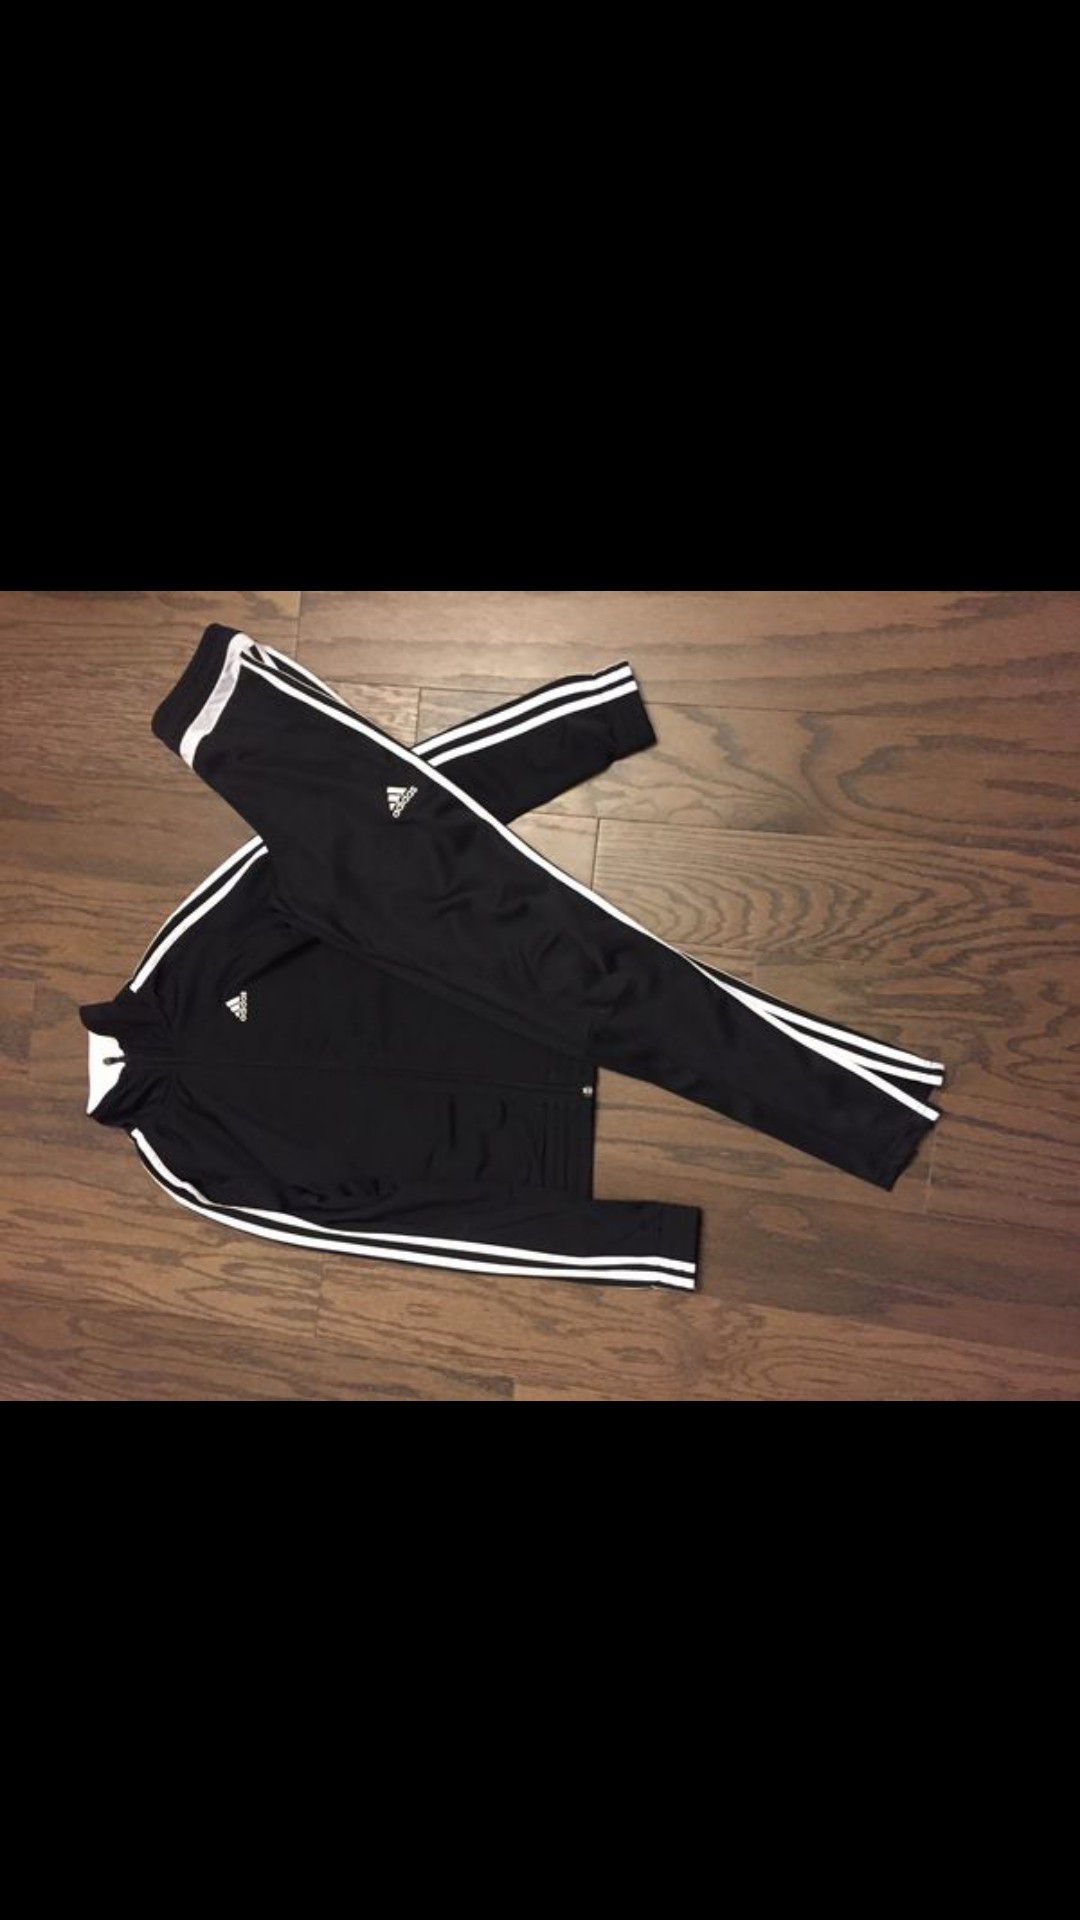 Adidas Original 3 Stripes Climacool Track Jacket and Pants Sportswear Size XS